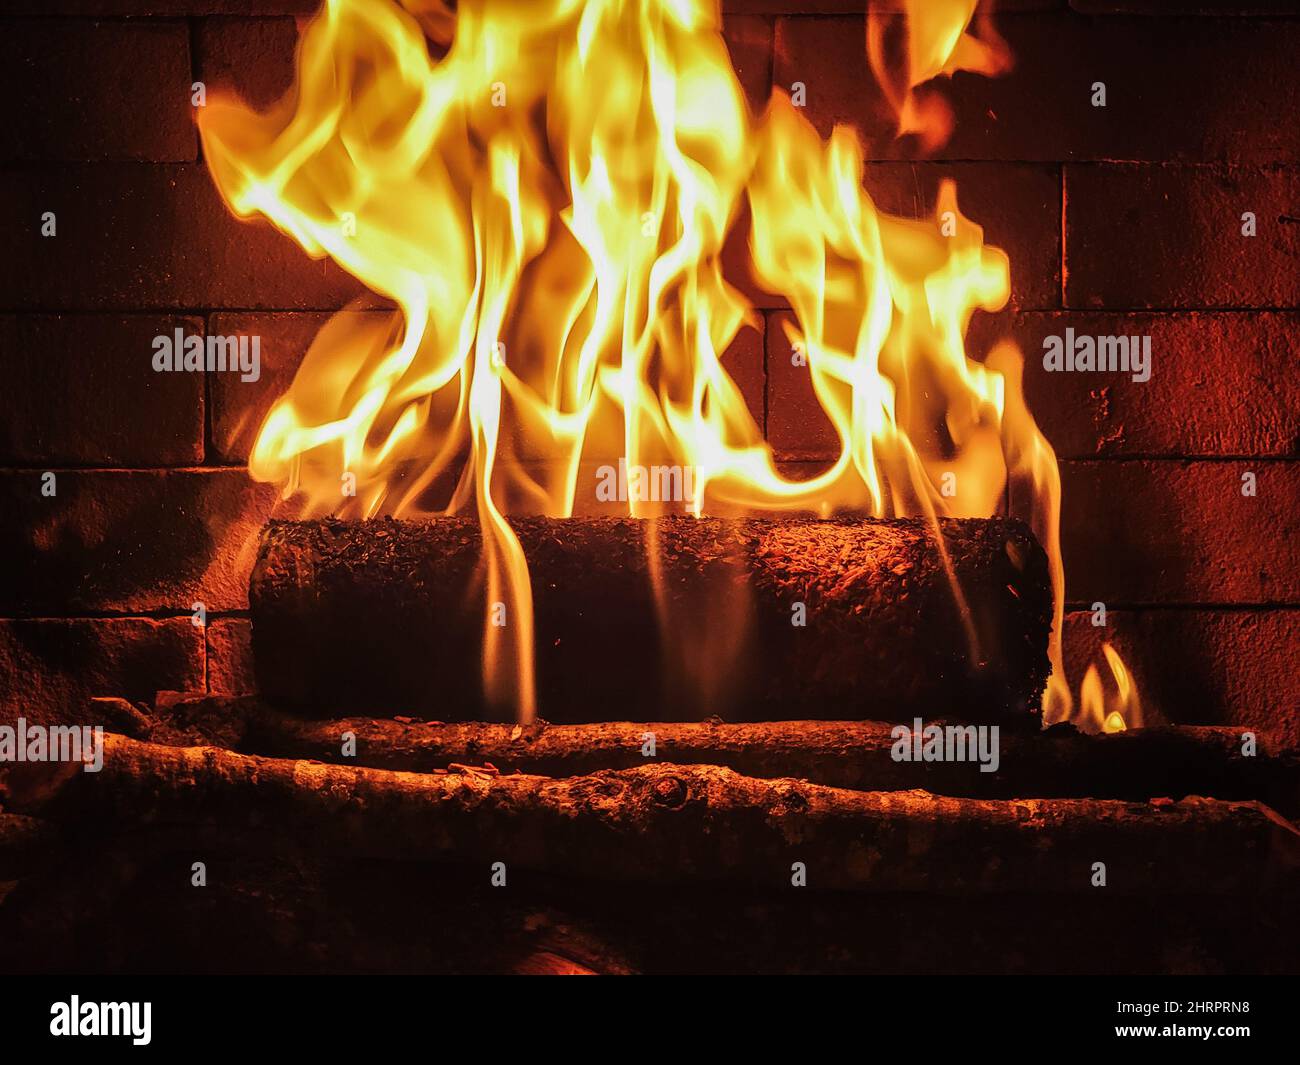 Closeup shot of burning woods on a brick fireplace Stock Photo